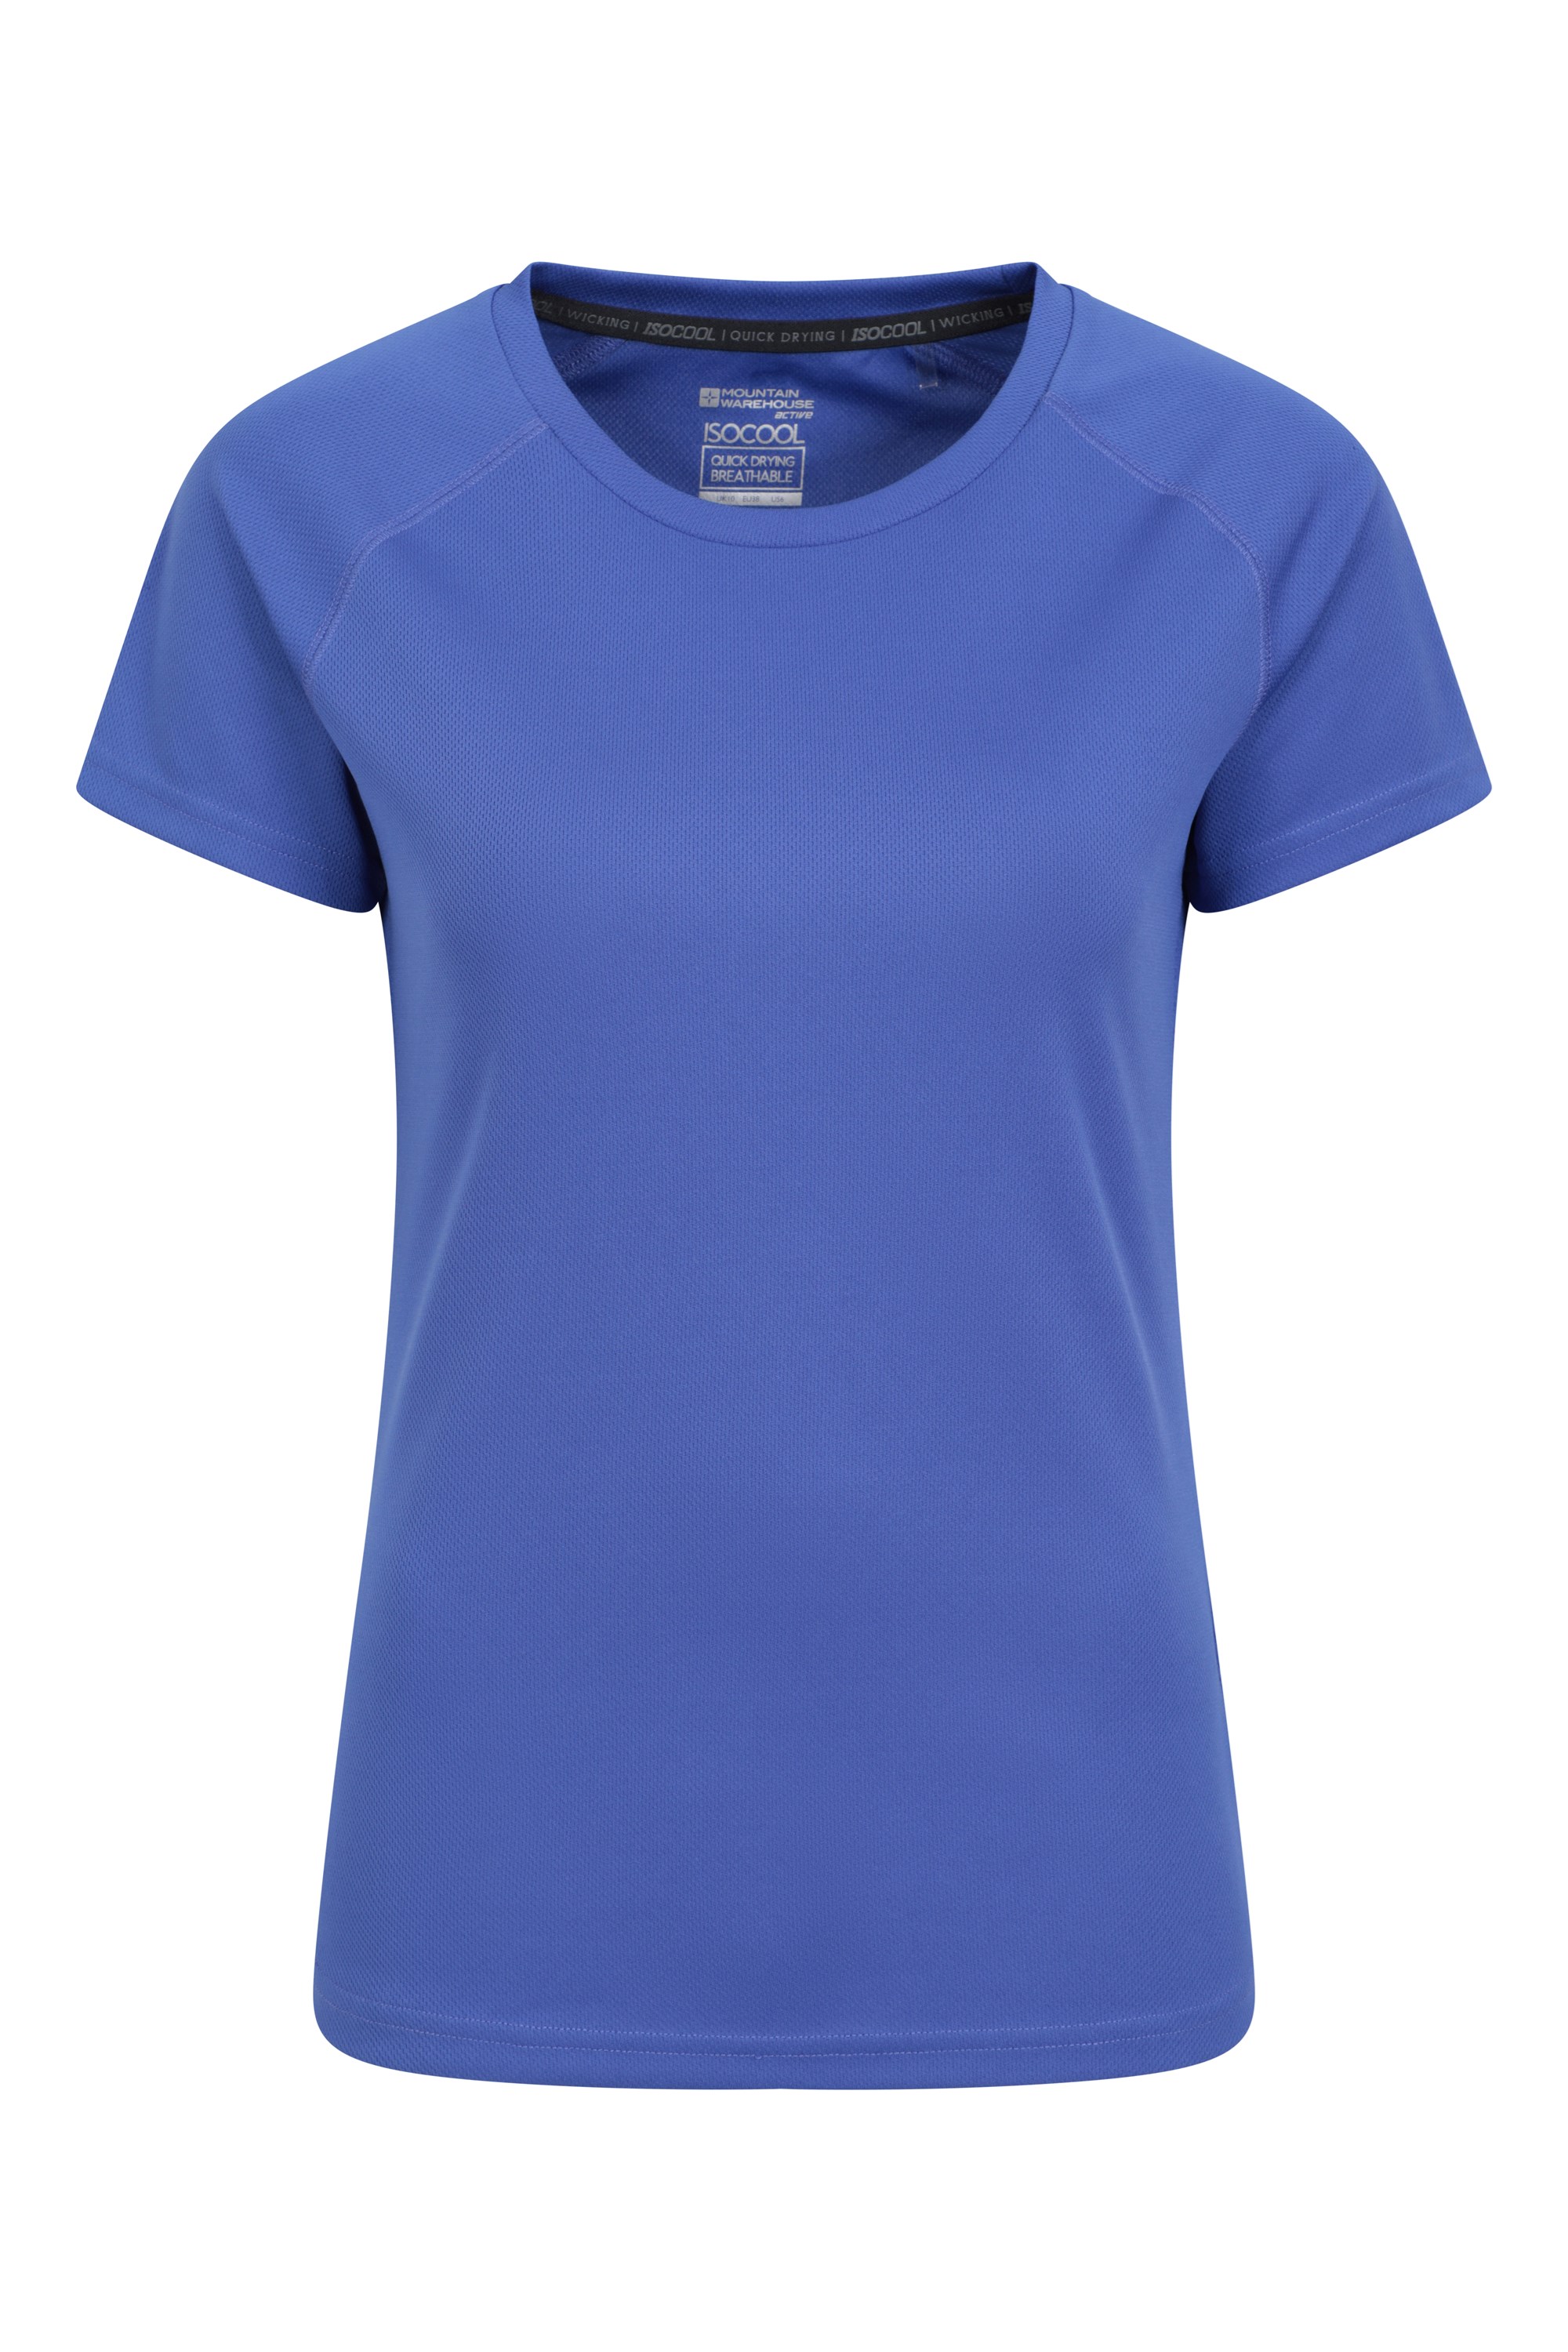 Endurance Womens T-Shirt - Dark Blue